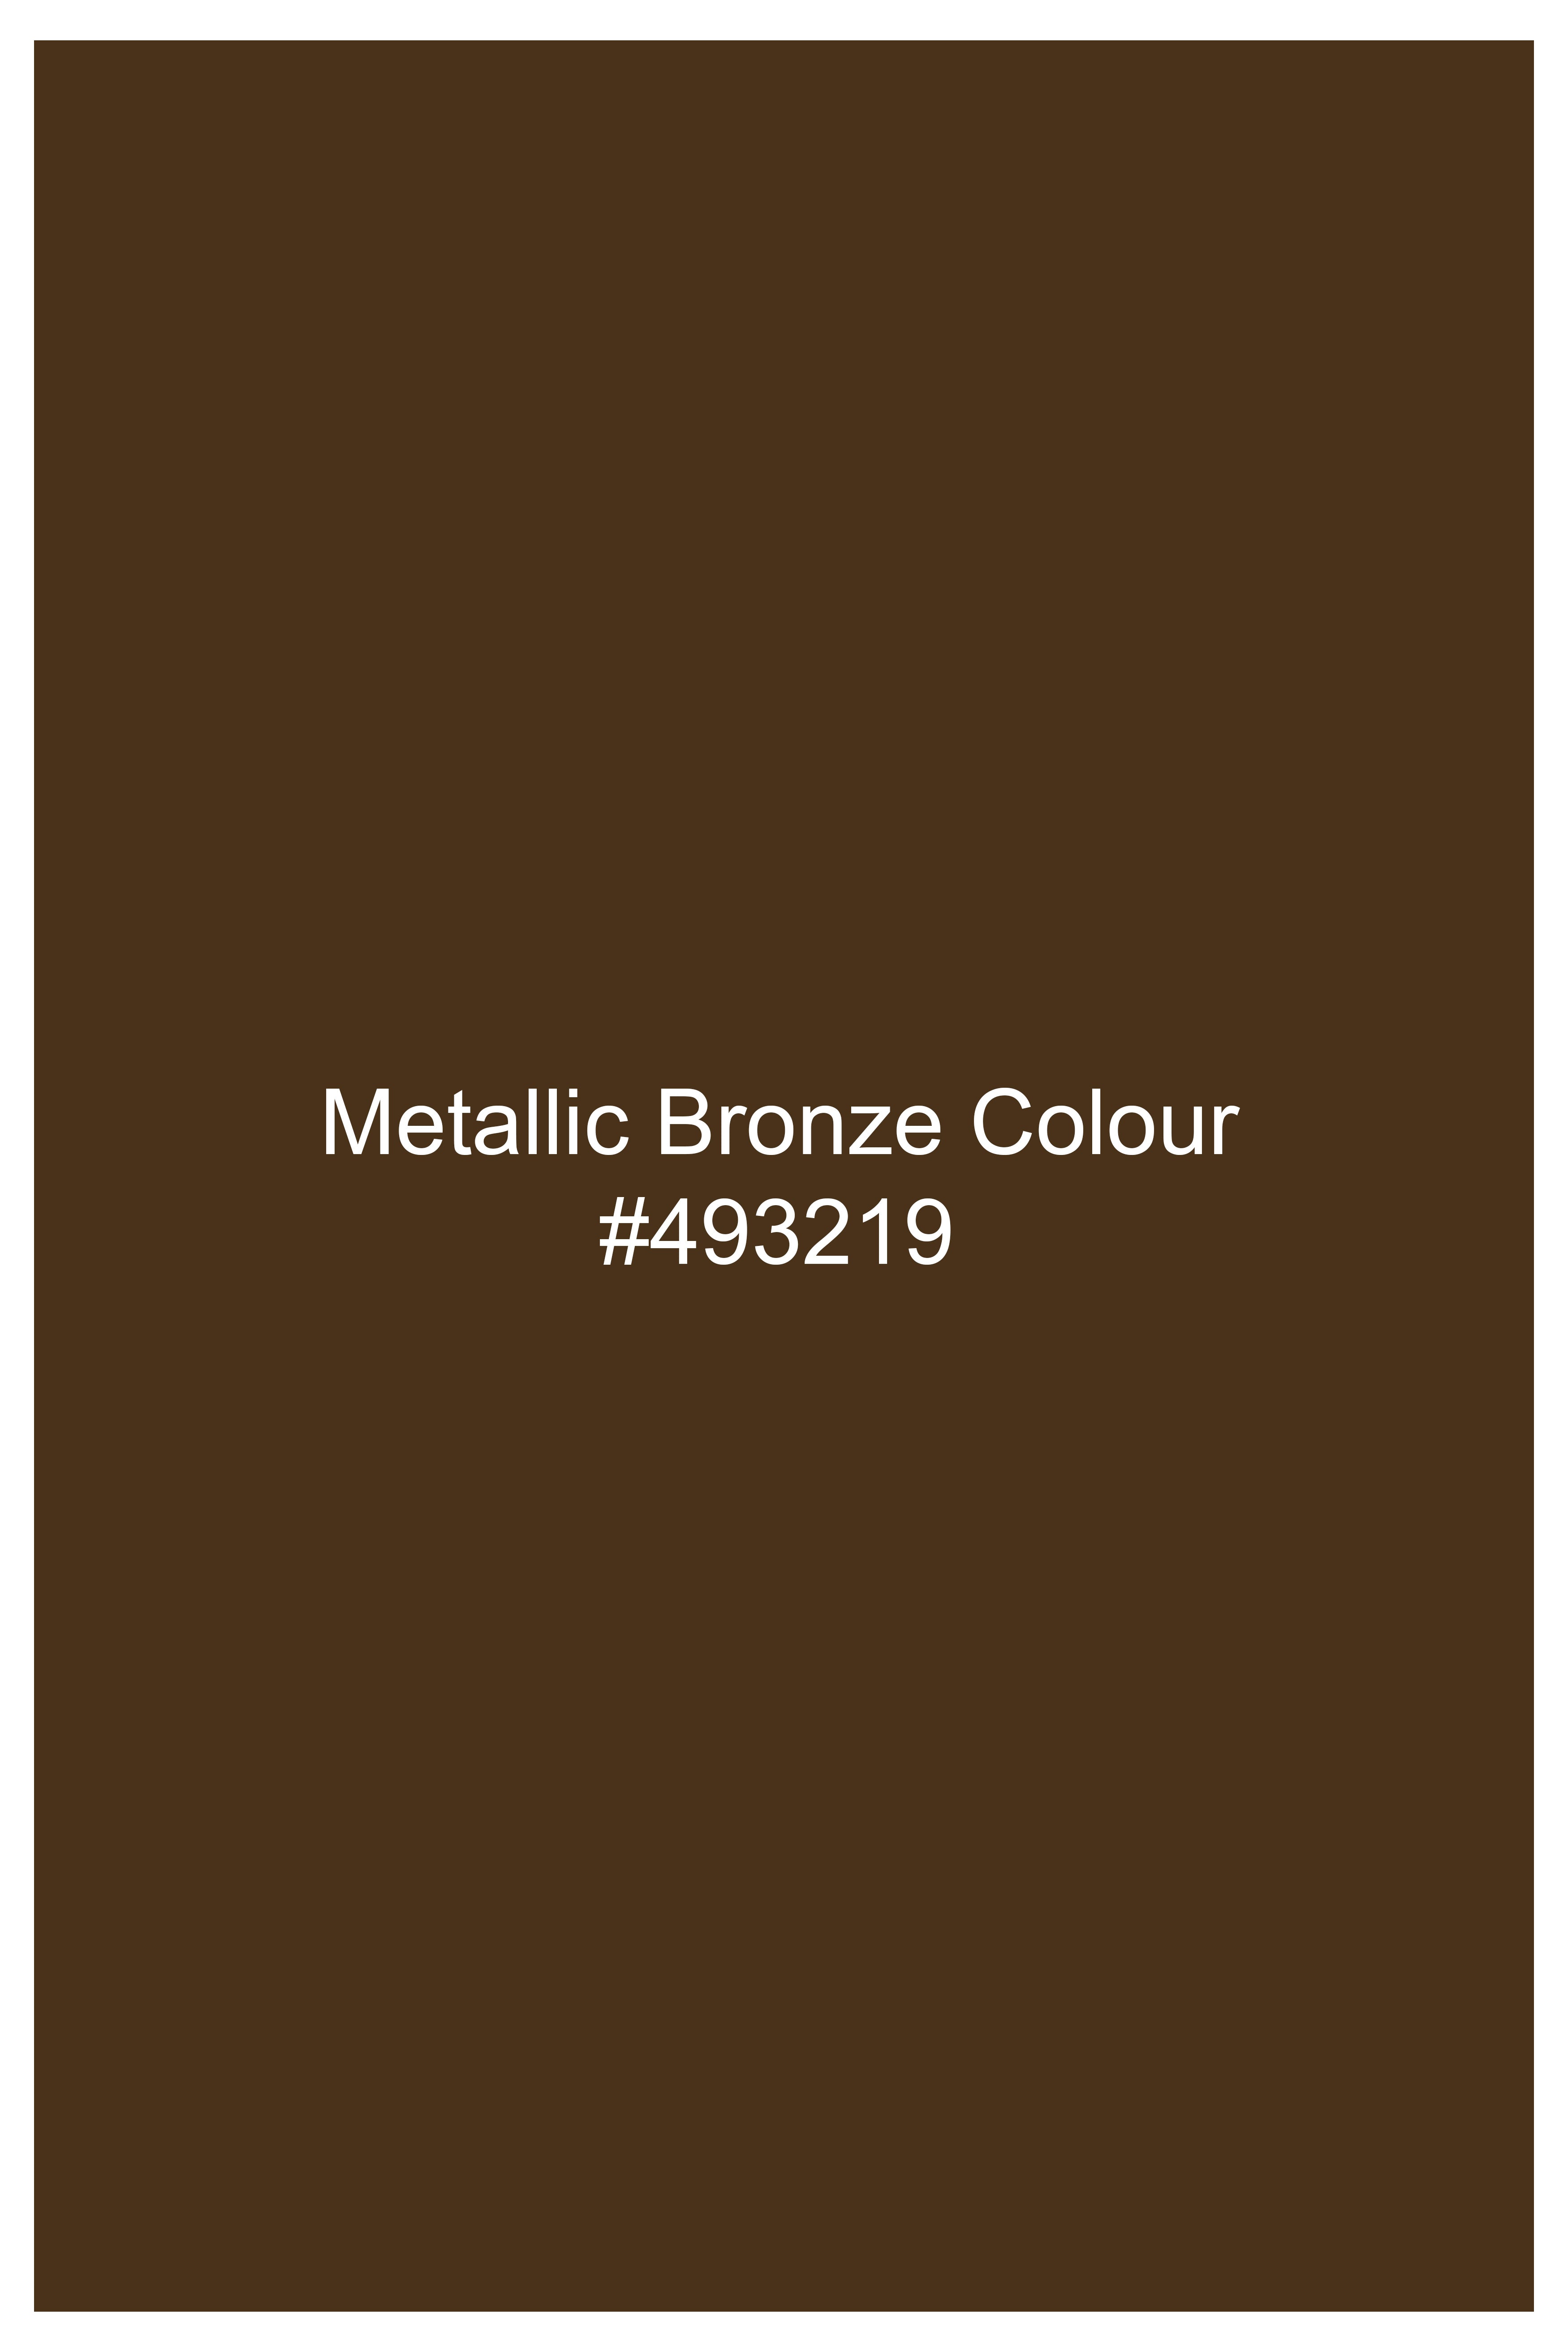 Metallic Bronze Brown Premium Cotton Bandhgala Stretchable Traveler Blazer BL2780-BG-36, BL2780-BG-38, BL2780-BG-40, BL2780-BG-42, BL2780-BG-44, BL2780-BG-46, BL2780-BG-48, BL2780-BG-50, BL2780-BG-52, BL2780-BG-54, BL2780-BG-56, BL2780-BG-58, BL2780-BG-60